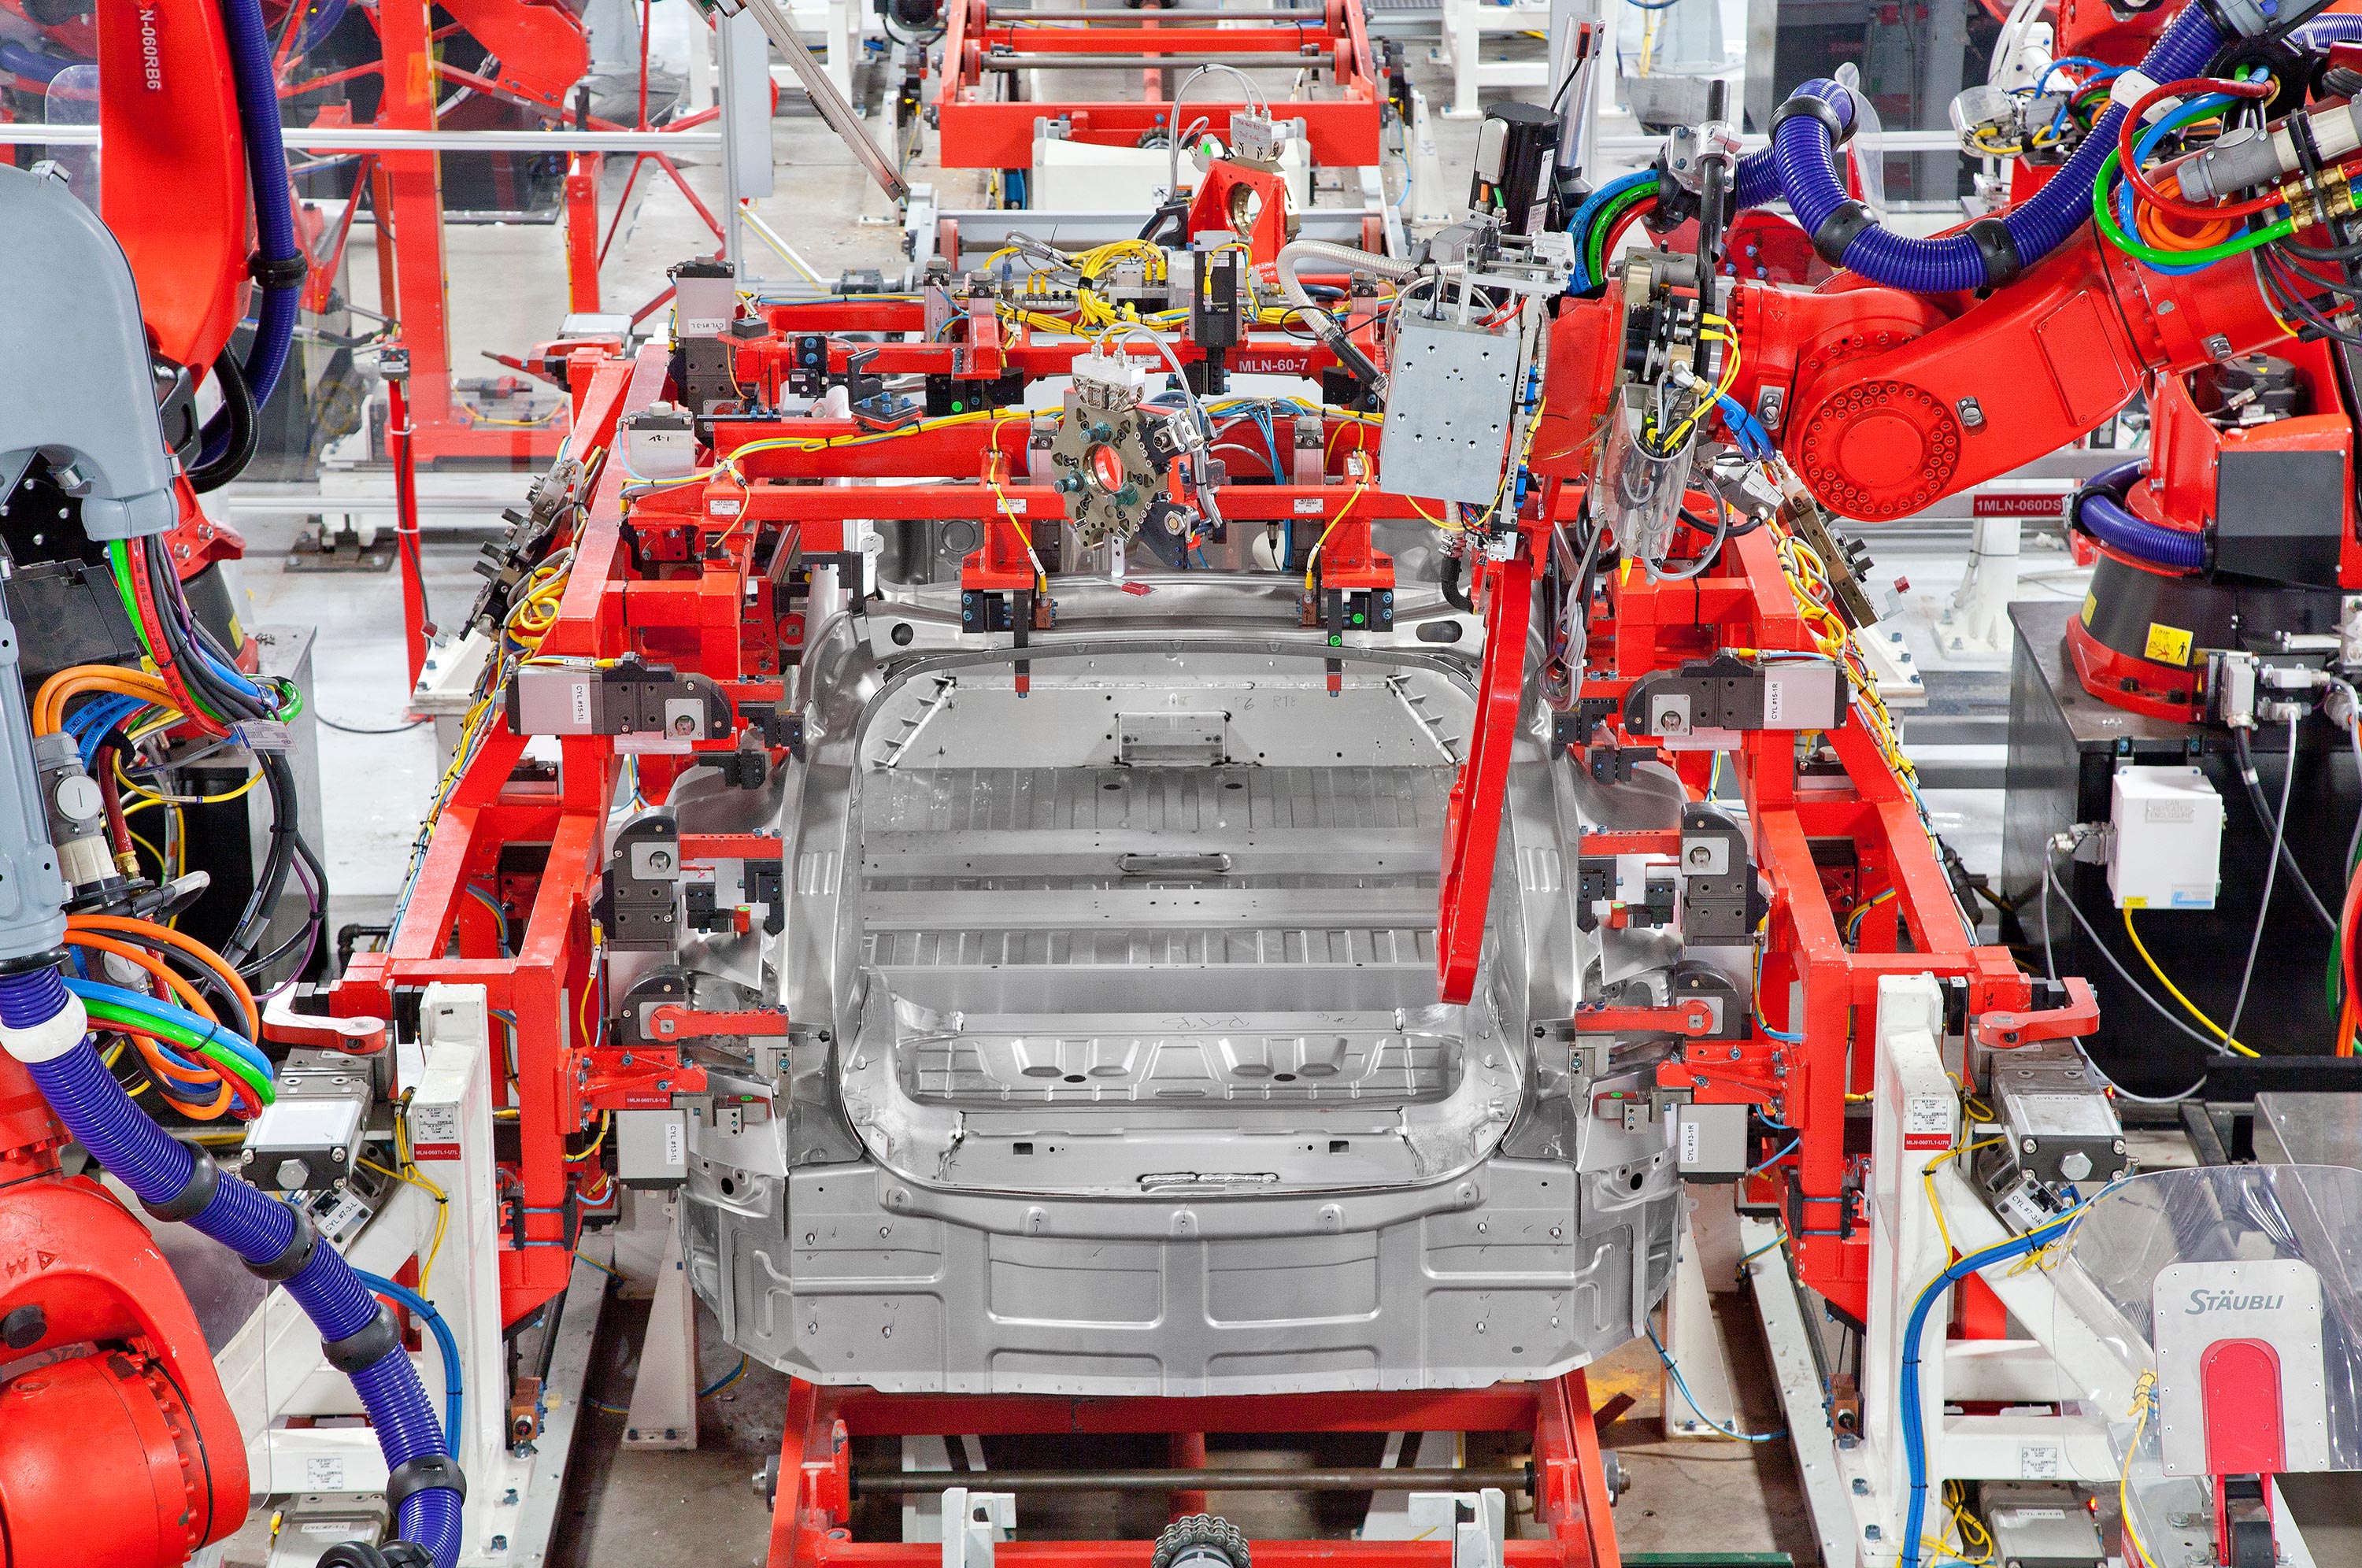 Inside Tesla's car body factory on June 5, 2012. Photographer: Tesla Motors Events